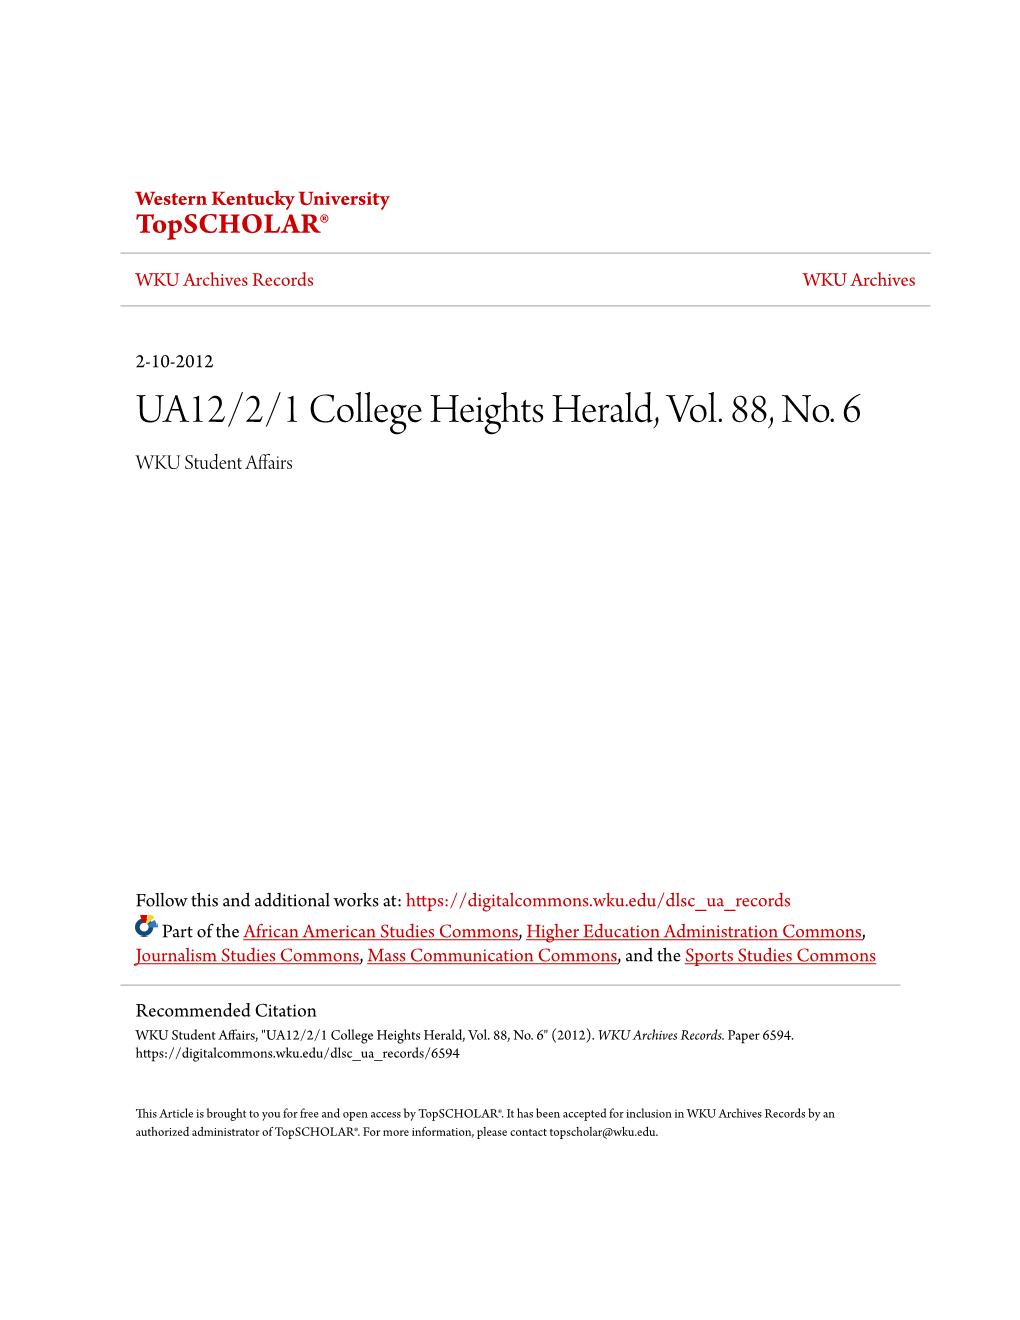 UA12/2/1 College Heights Herald, Vol. 88, No. 6 WKU Student Affairs